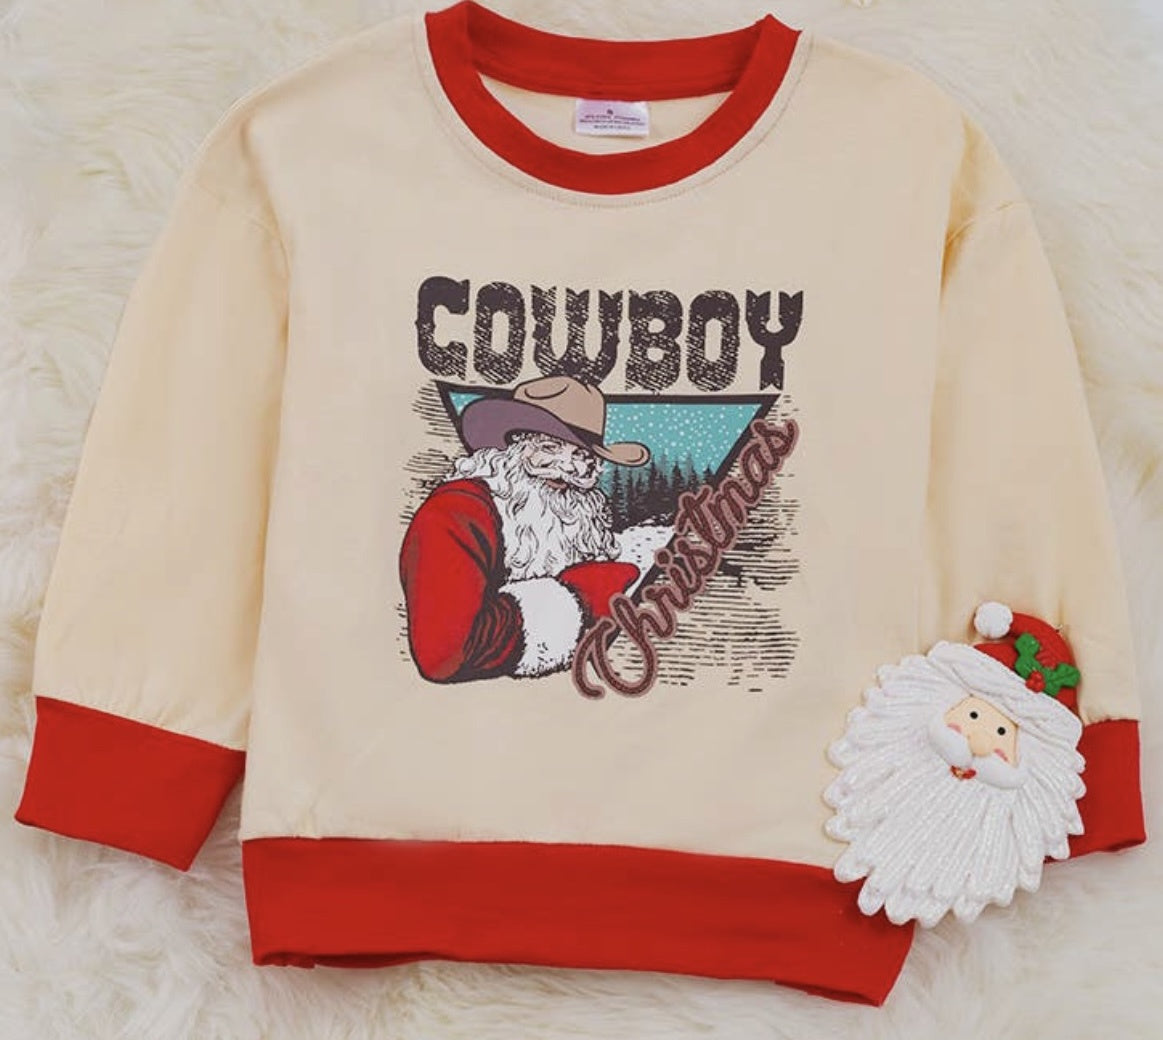 Cowboy Christmas Sweatshirt